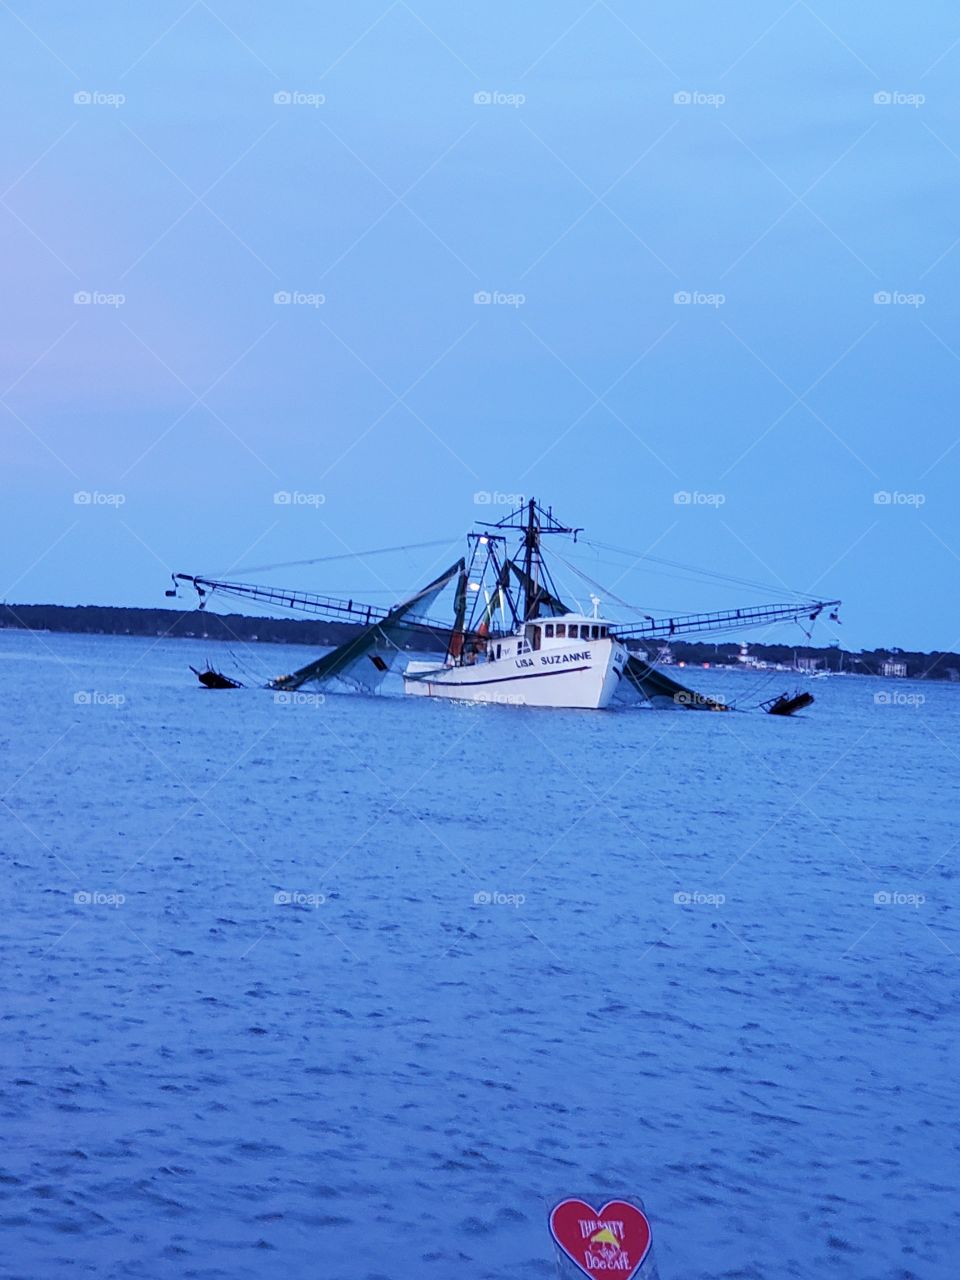 shrimp boat evening in SC